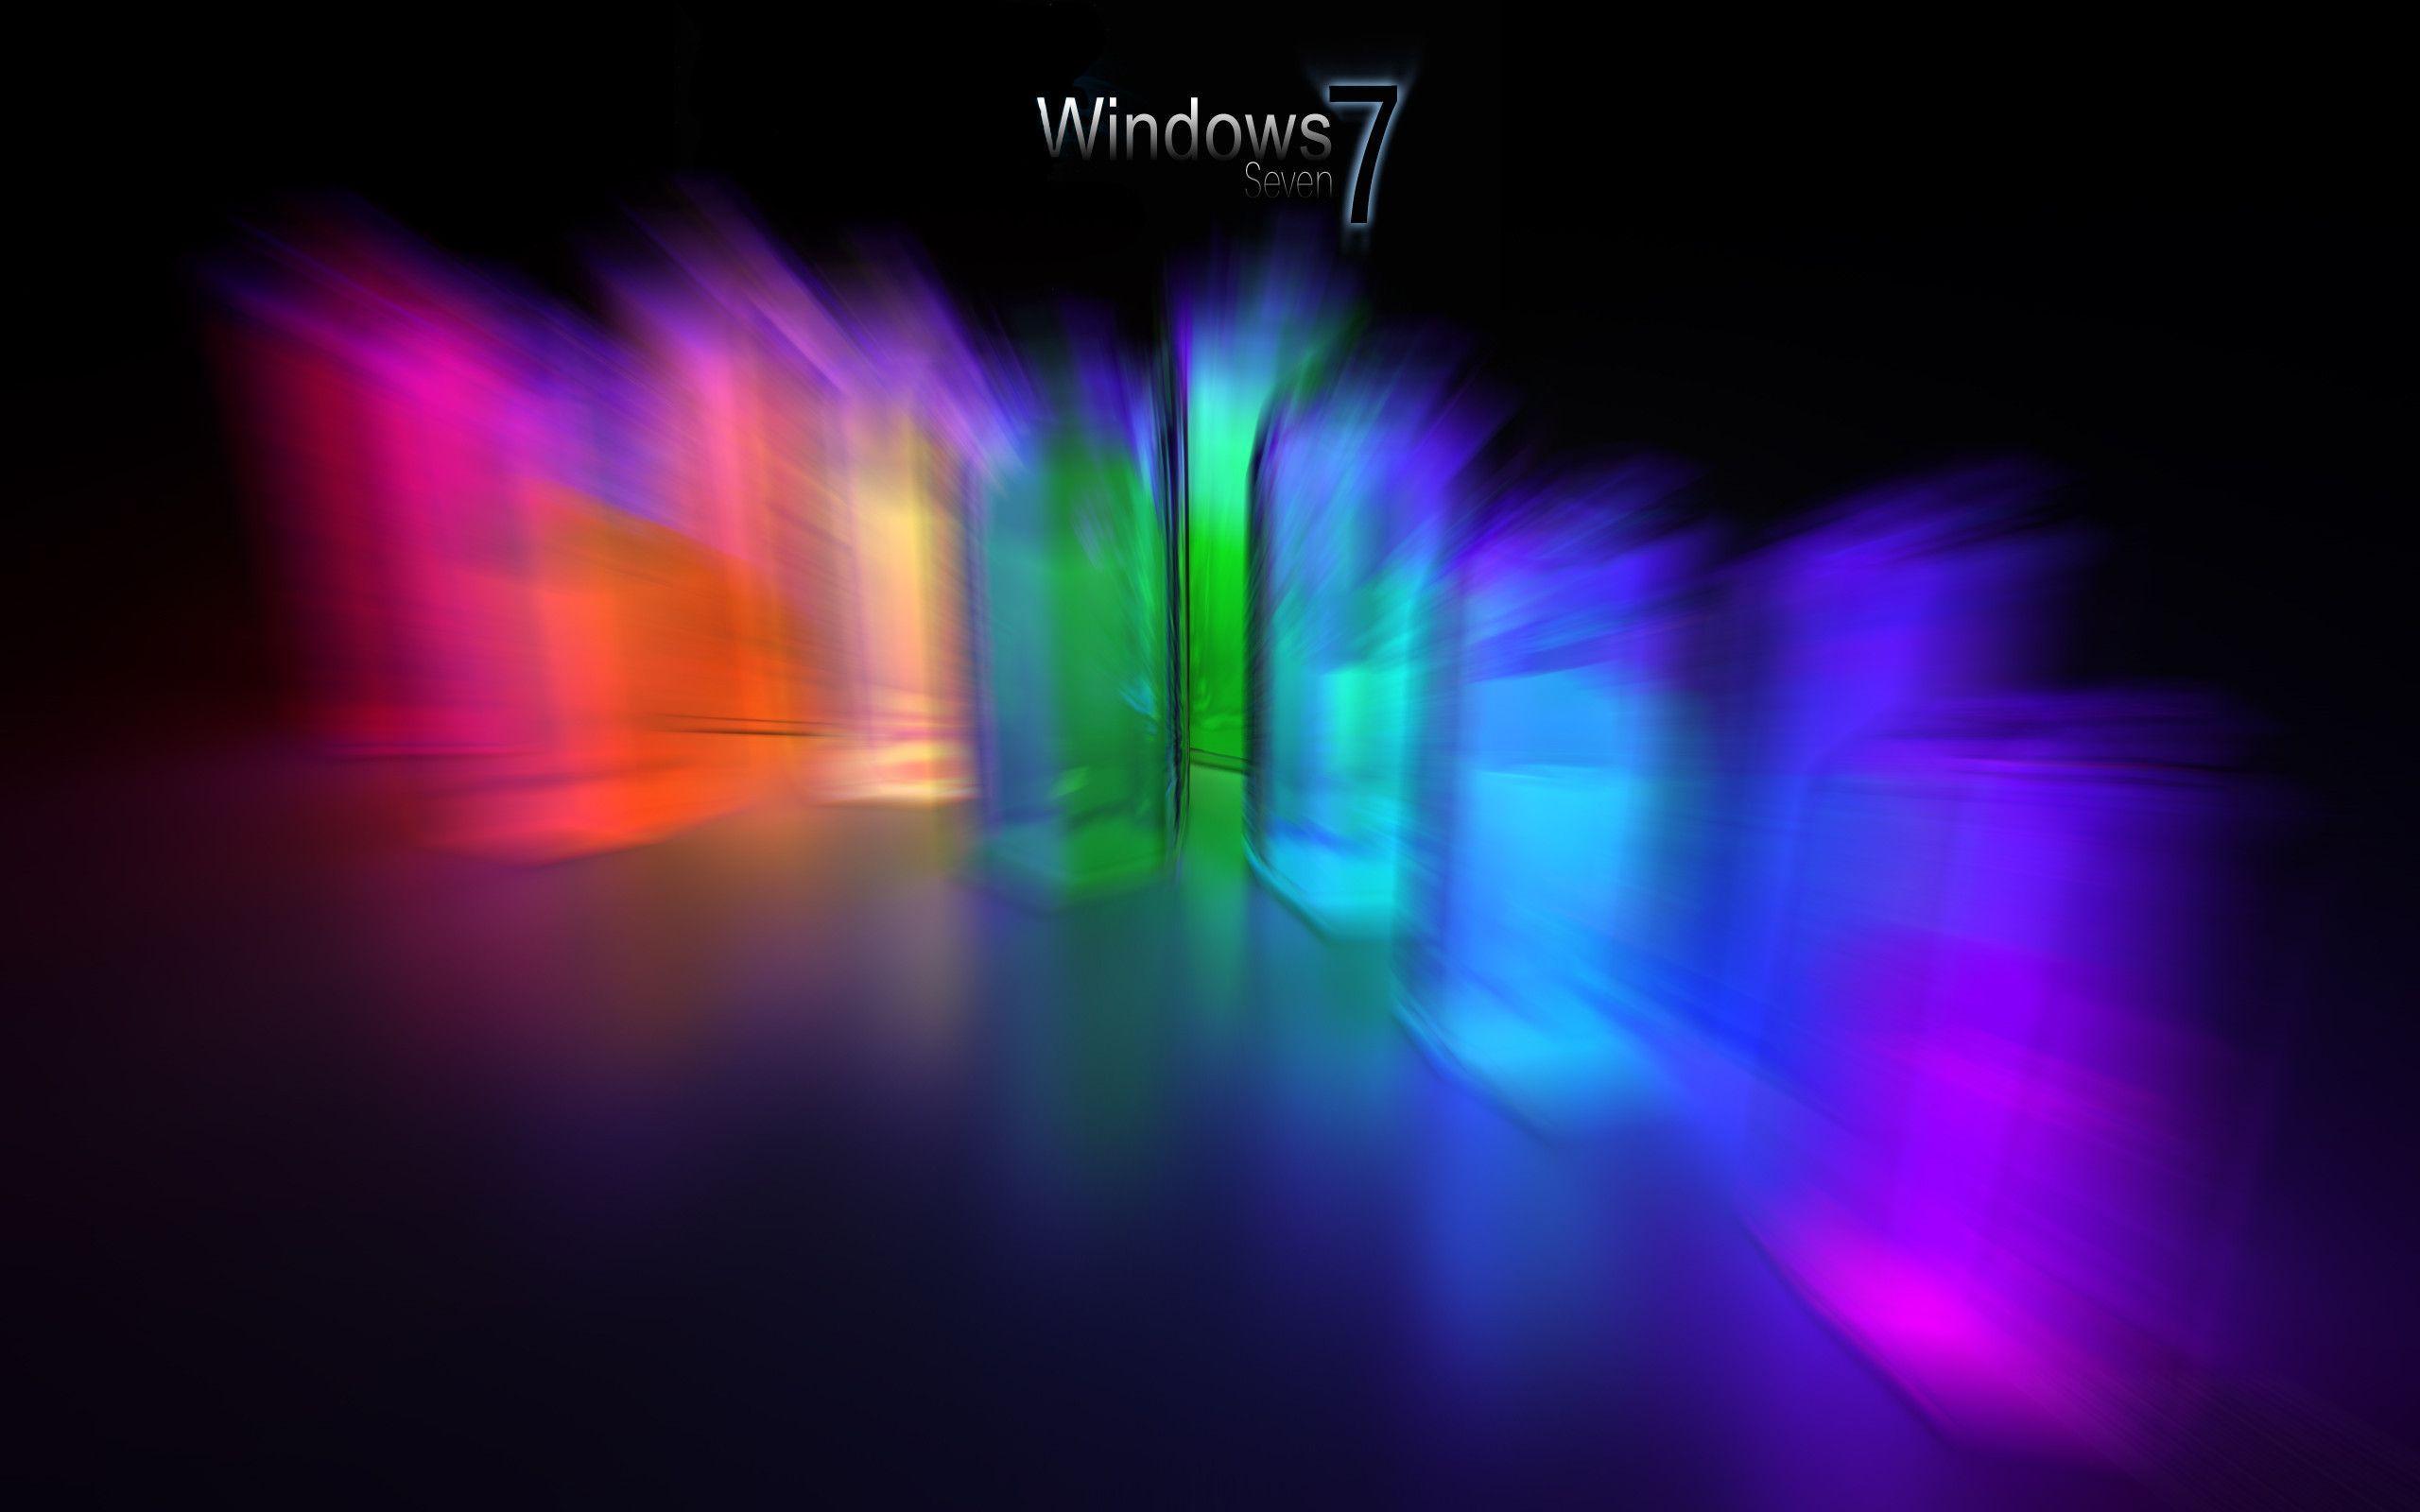 Windows7 Wallpaper Viny 4 Of 143. Phombo